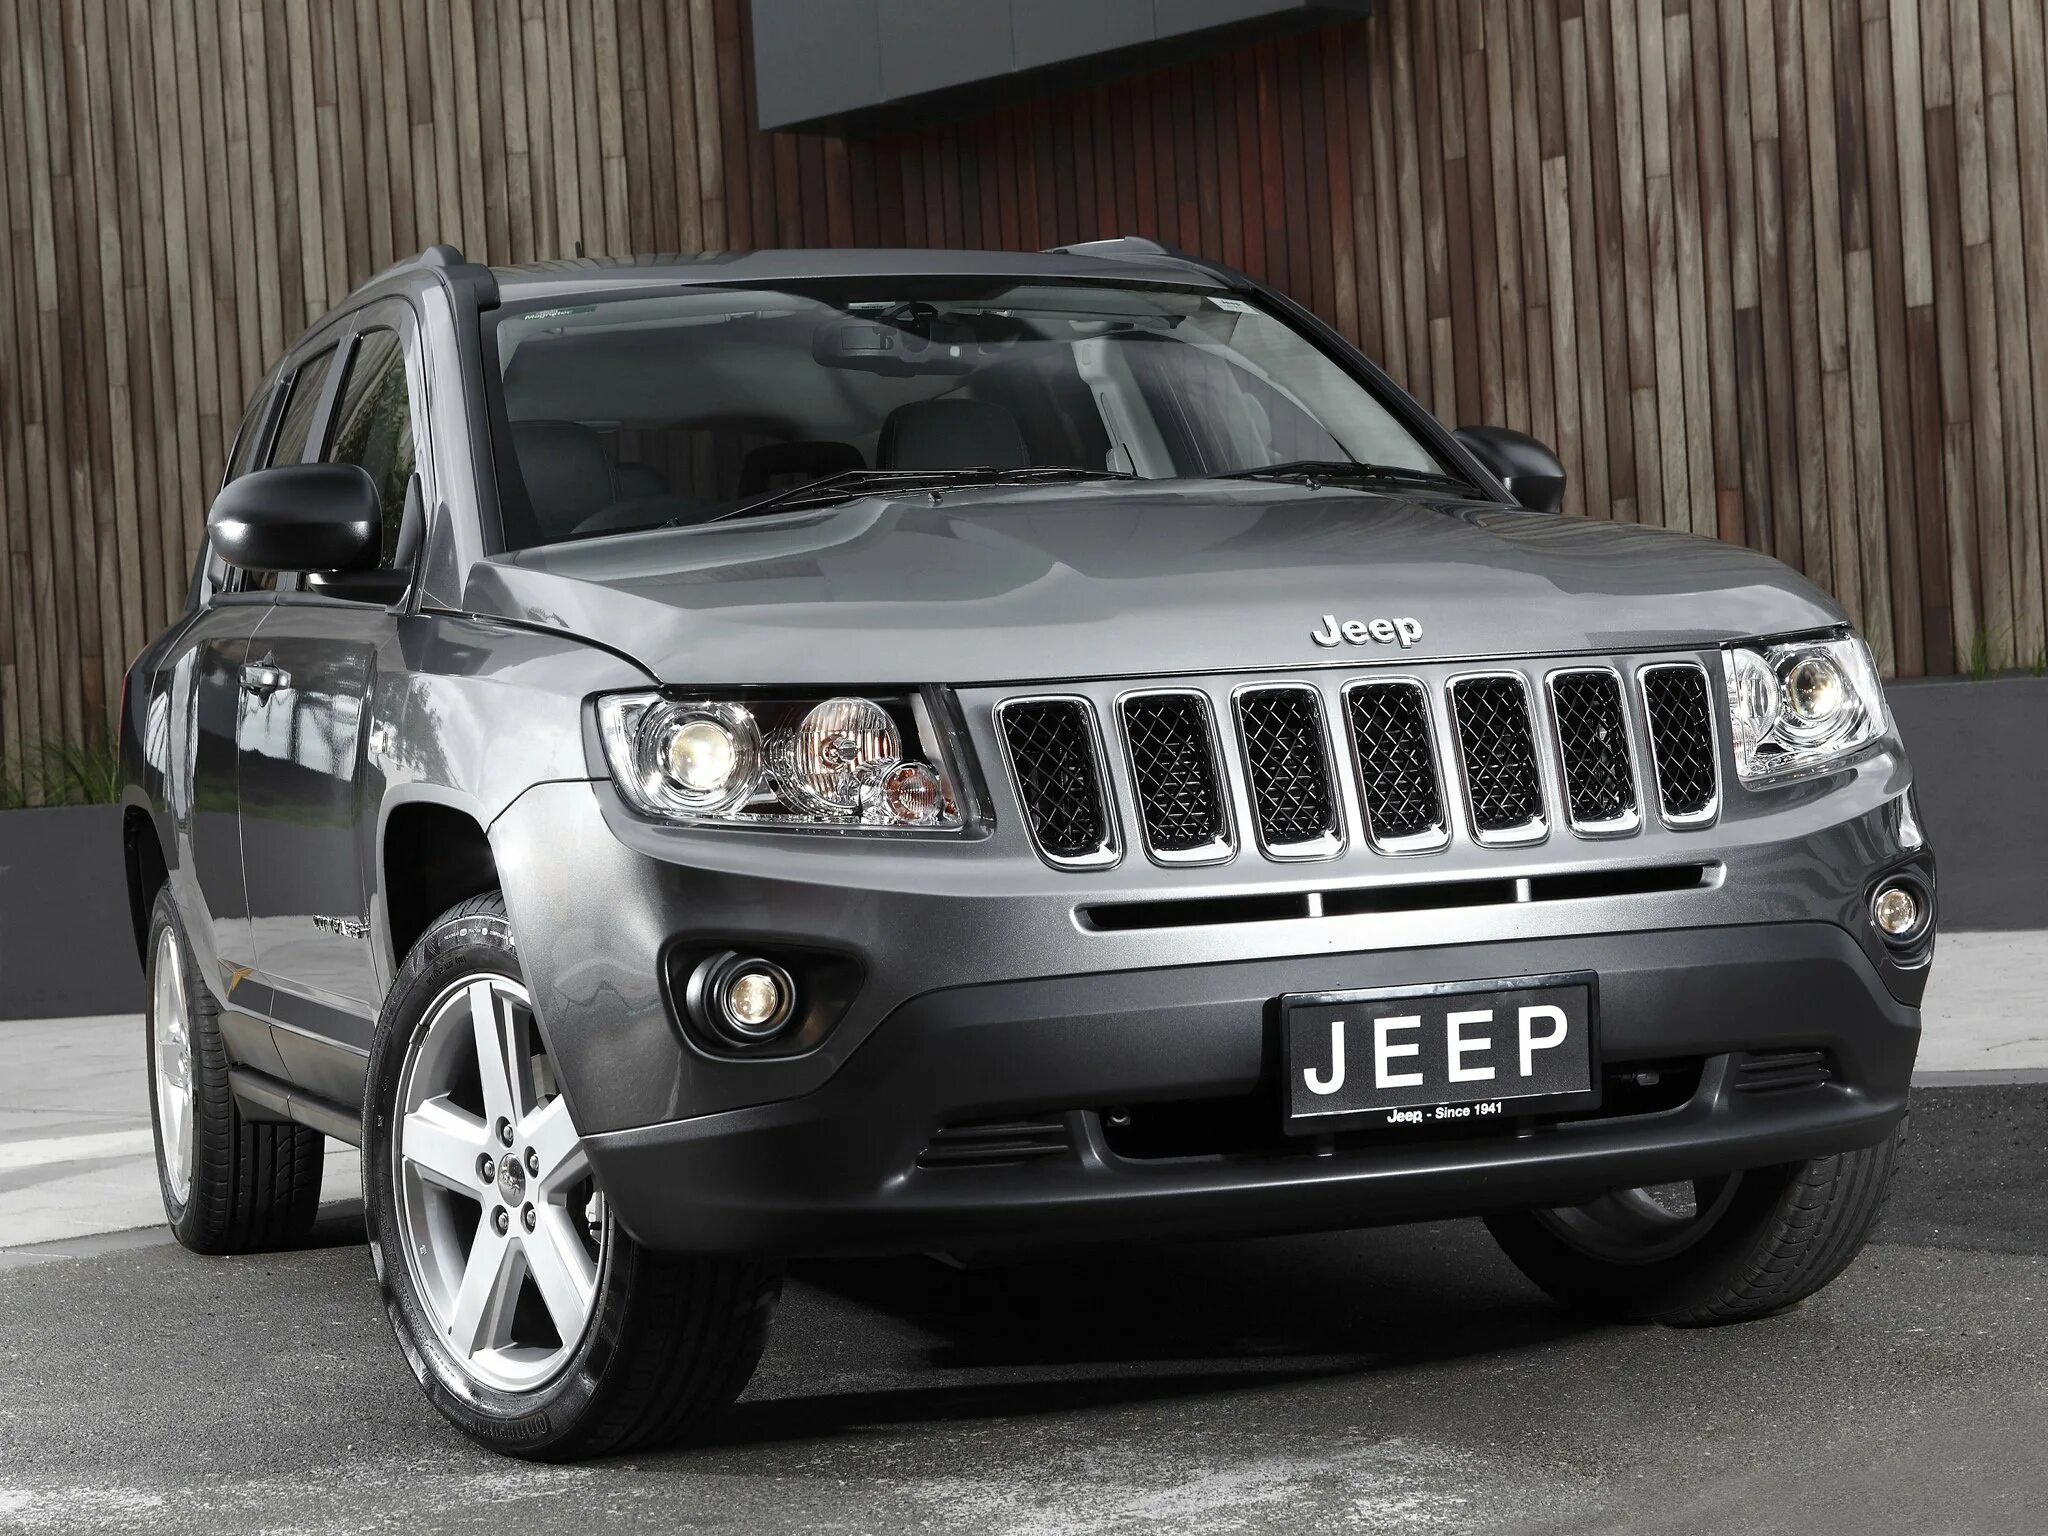 Jeep Compass 2012. Внедорожник Jeep Compass. Jeep Jeep Compass. Jeep Compass Sport 2014. Авто ру джип